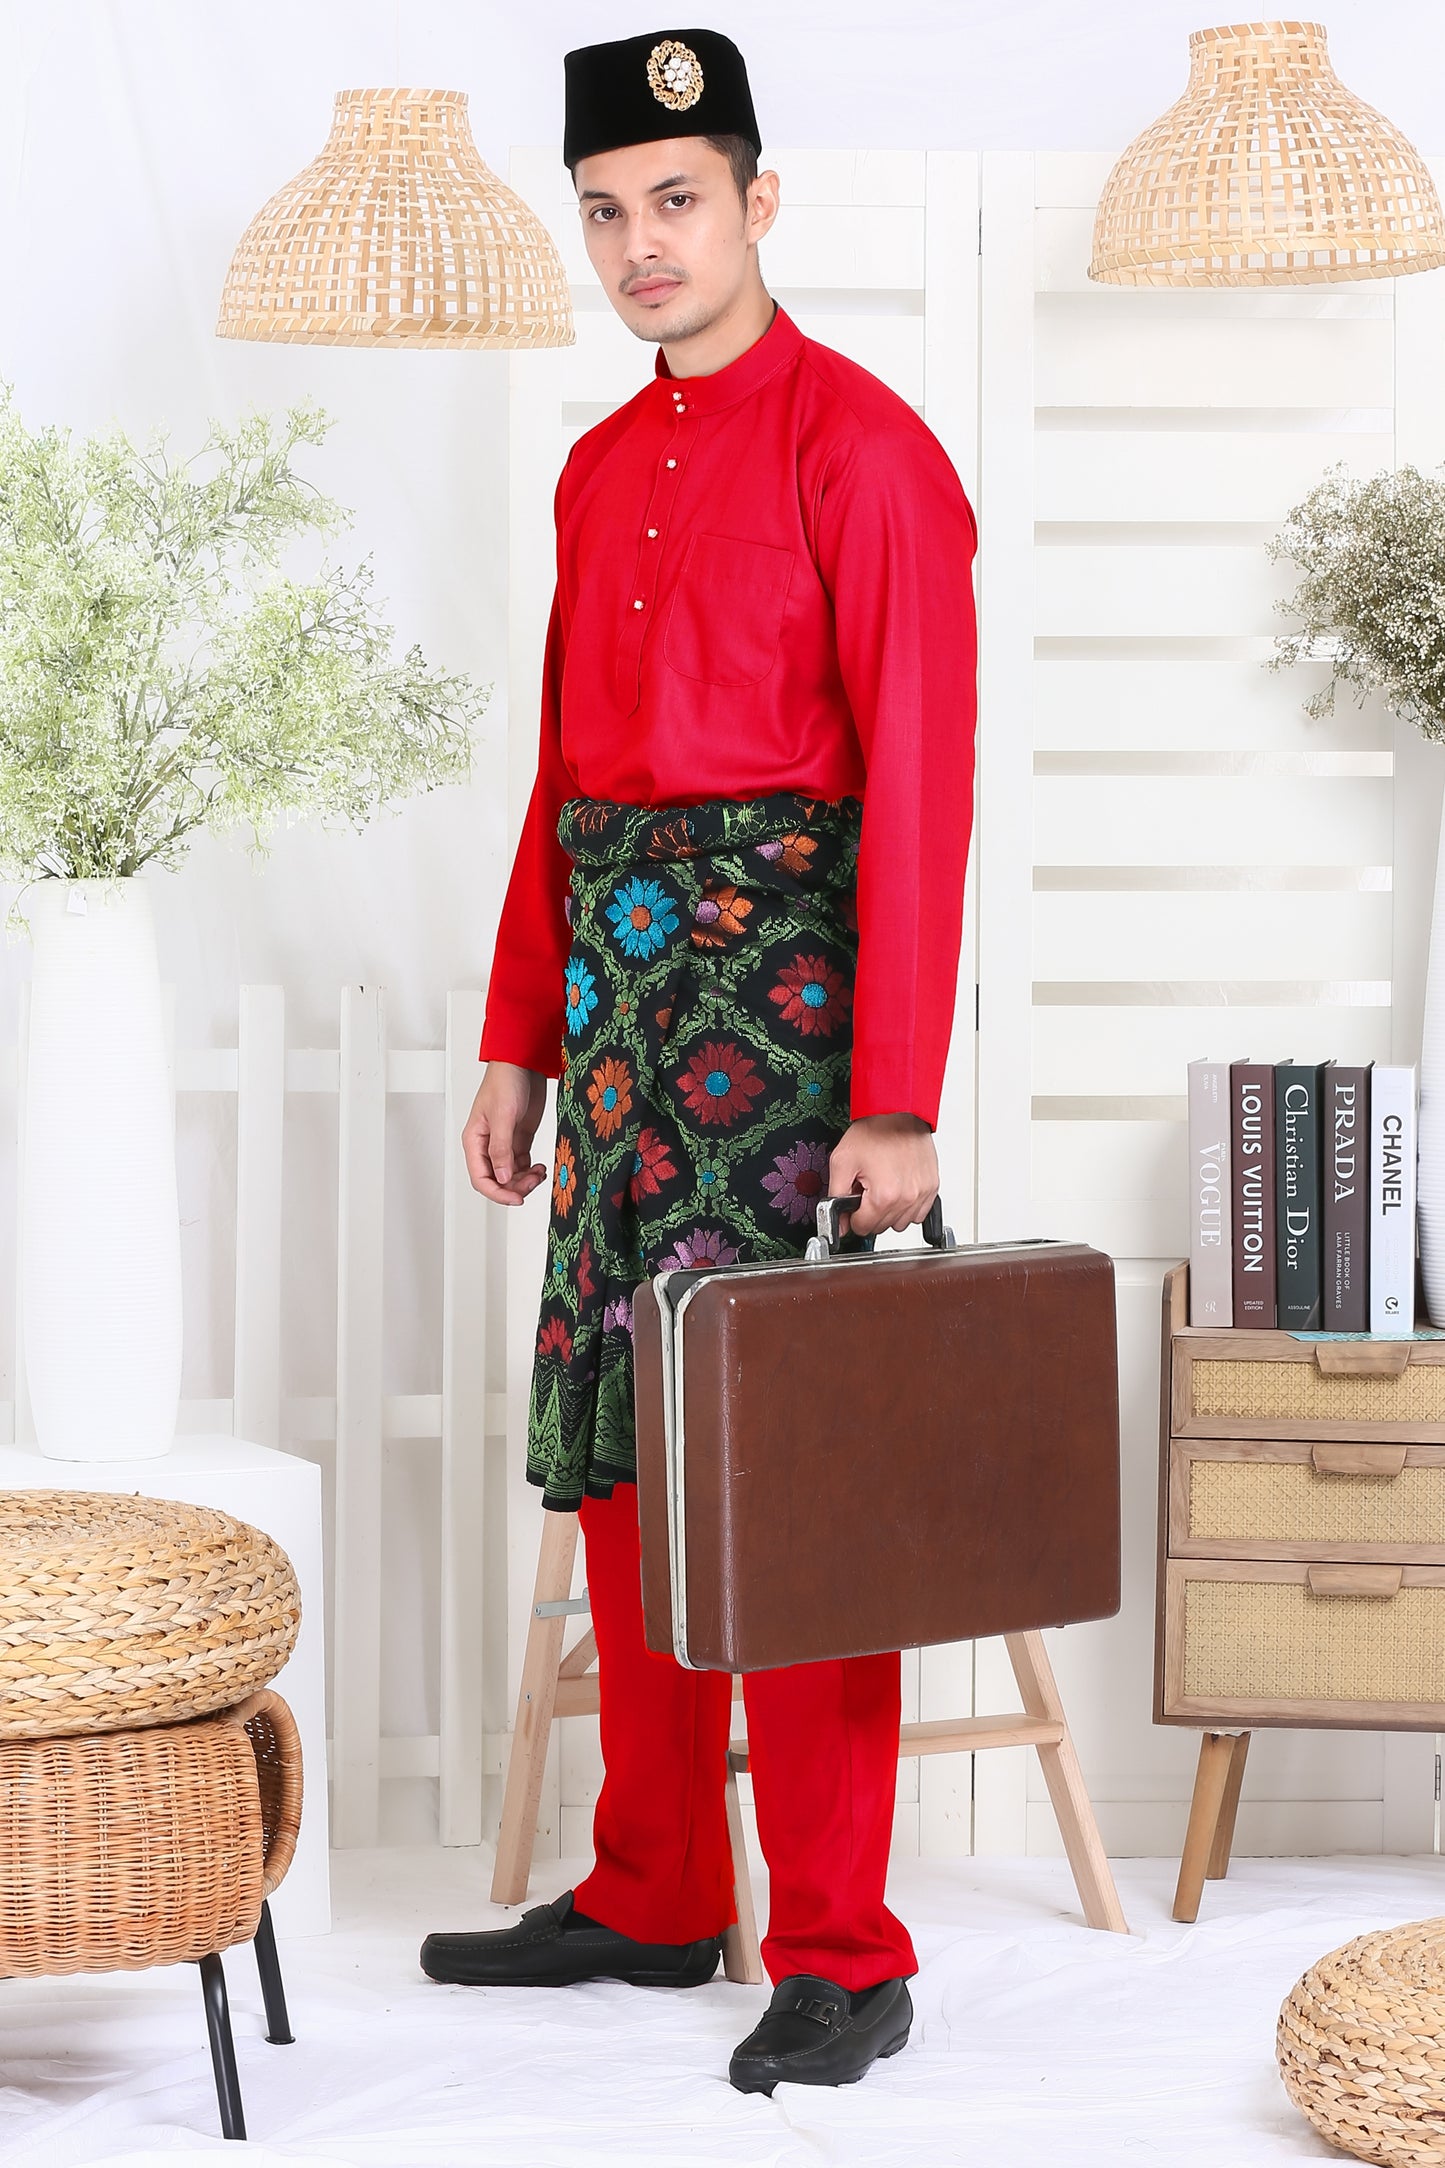 RAYA Baju Melayu Cekak Musang in Red Chilli